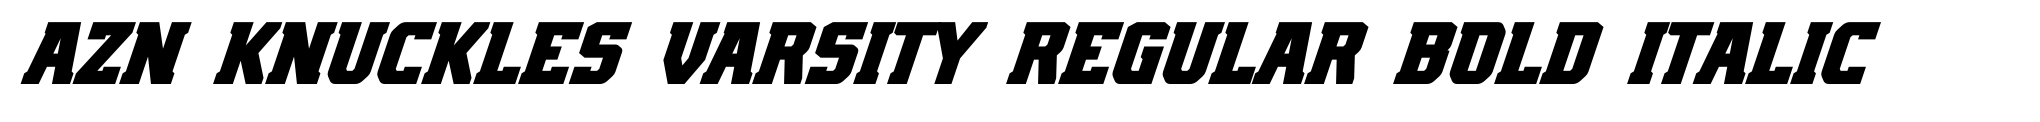 AZN Knuckles Varsity Regular Bold Italic image